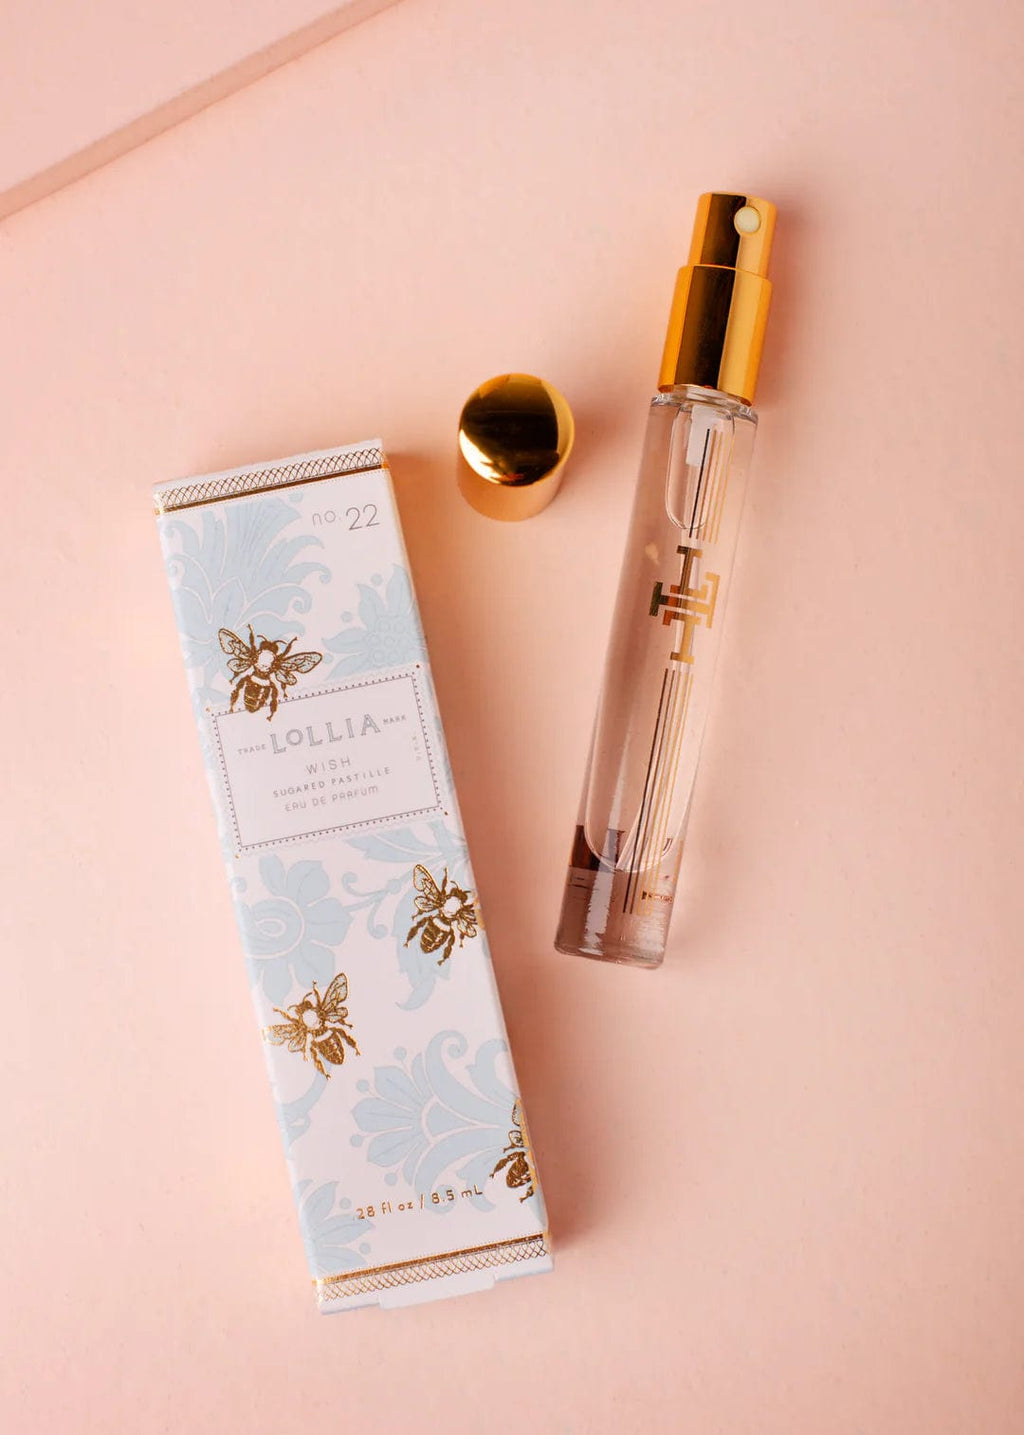 Lollia Perfume Wish Travel Eau De Parfum